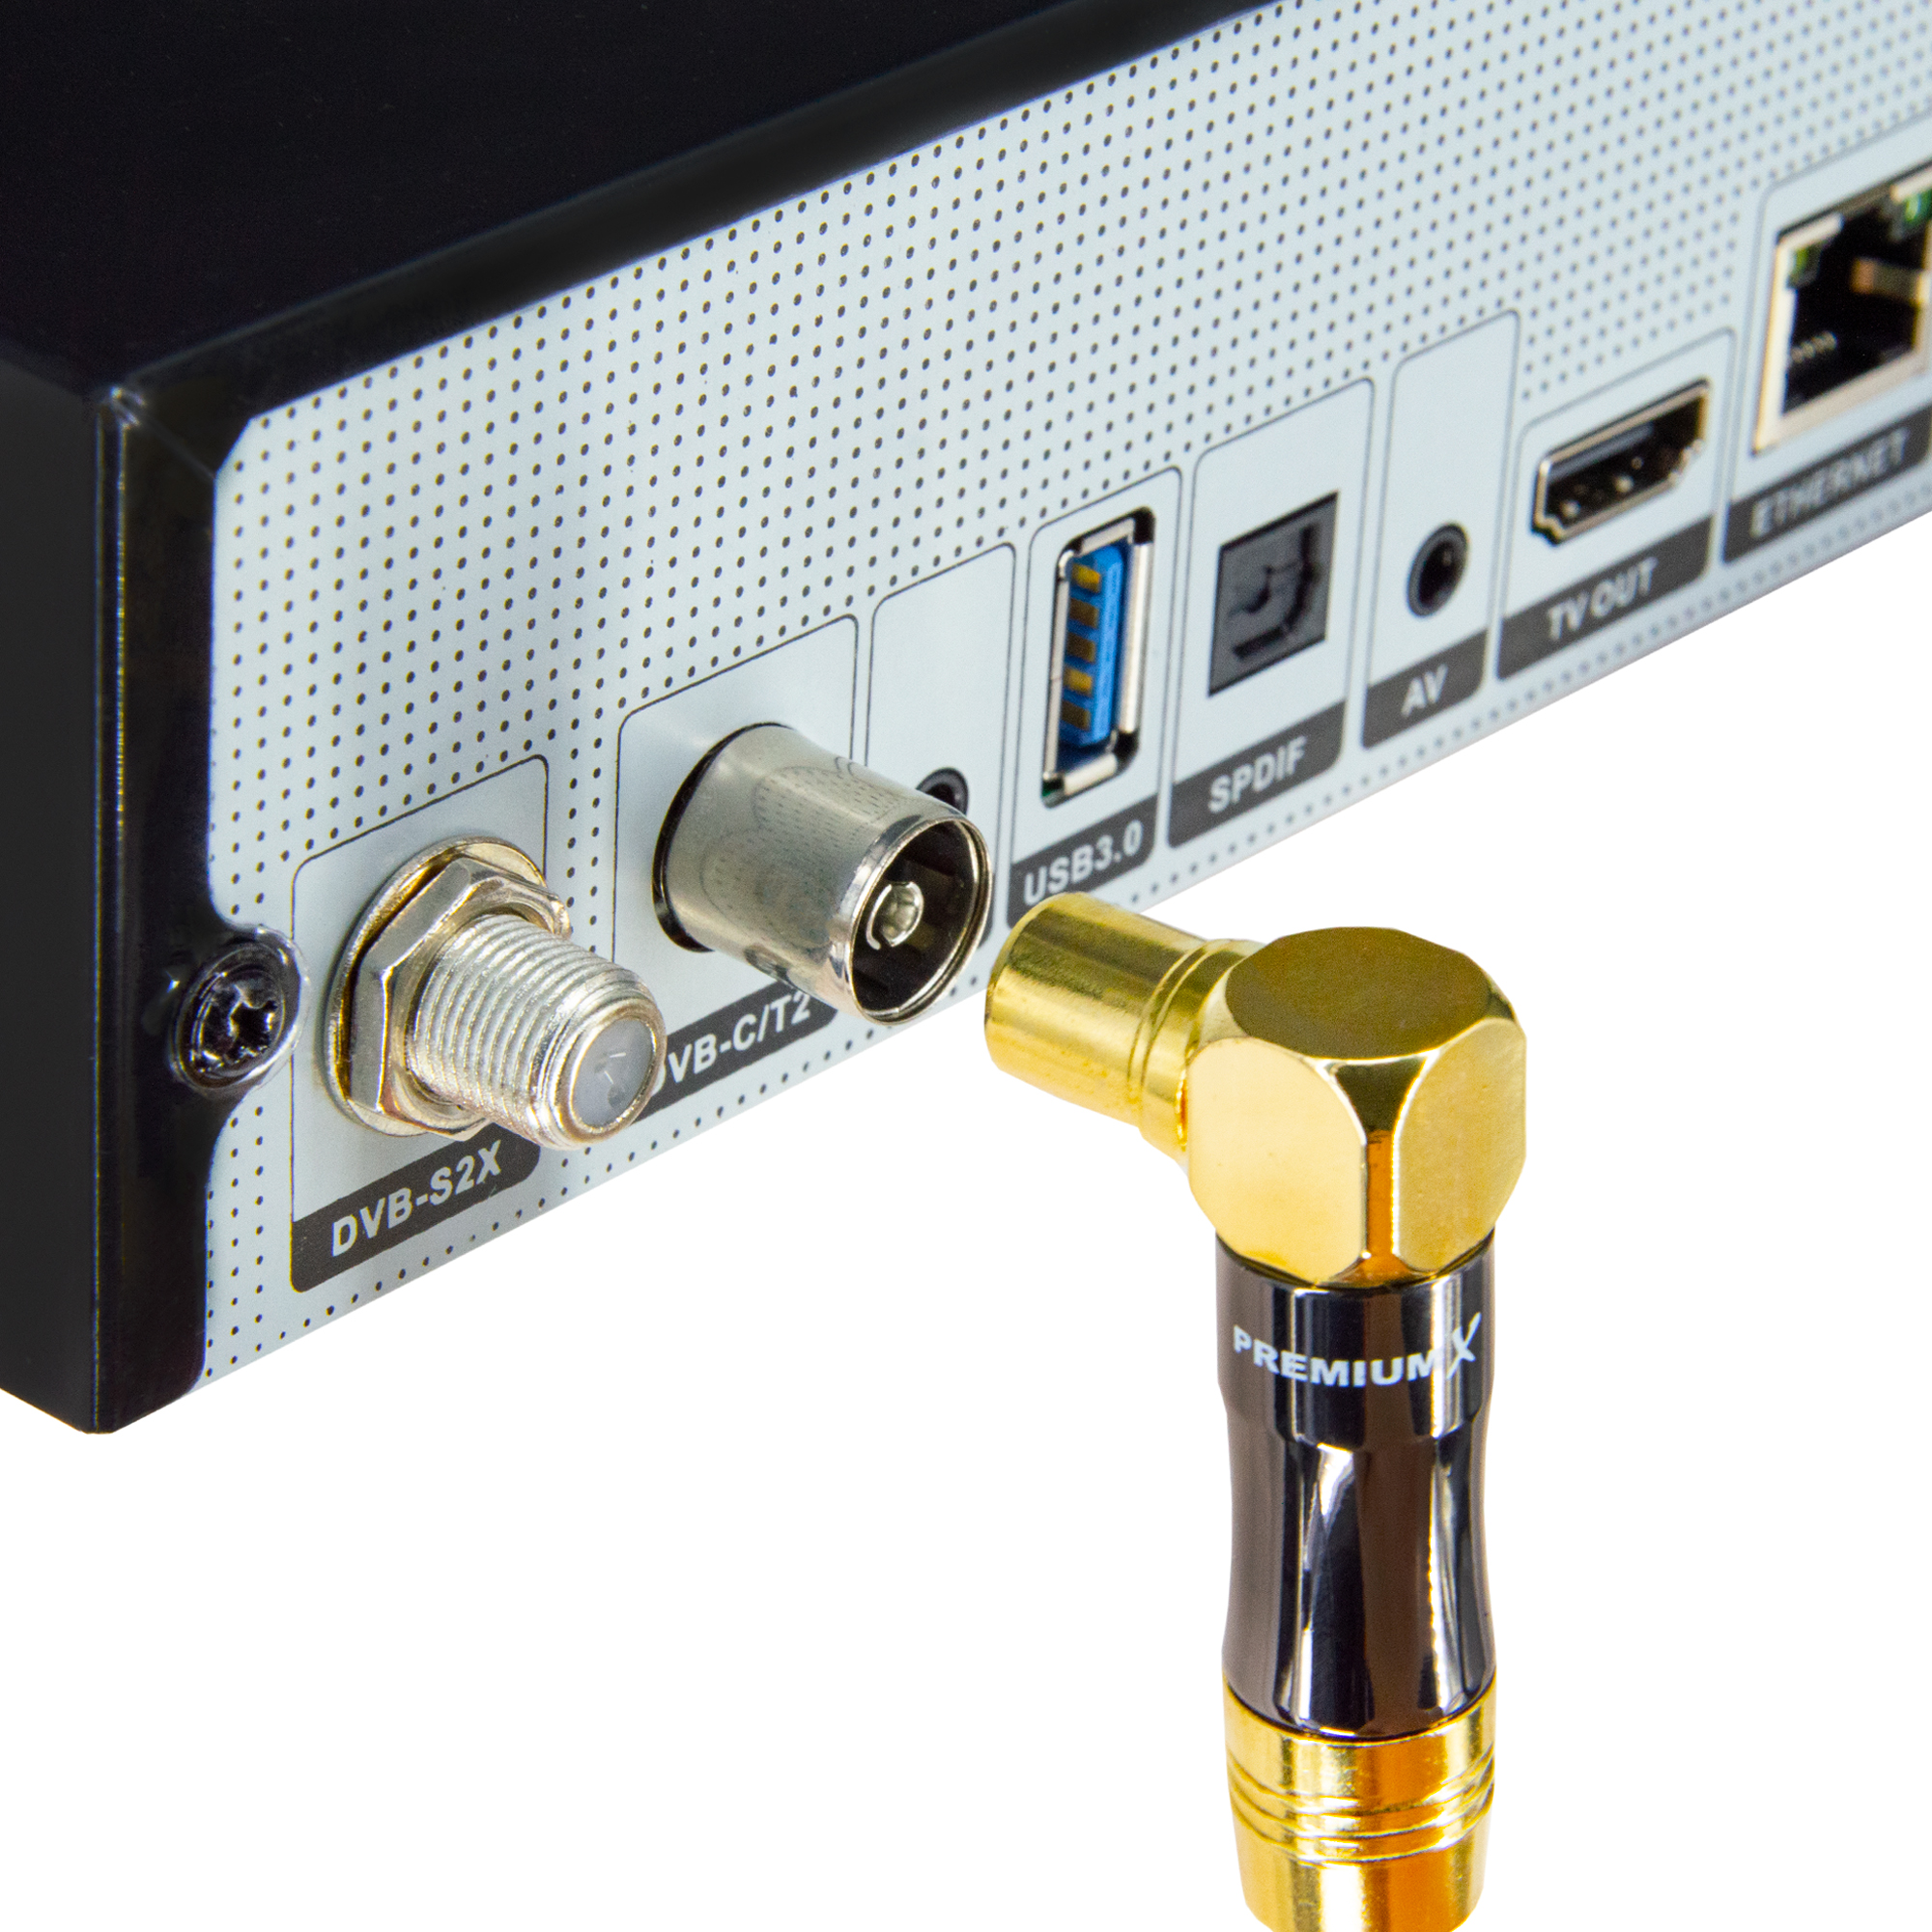 PREMIUMX 10m Gold-Line TV Antennenkabel gewinkelt - Stecker Koax-Anschluss IEC IEC Schwarz 90° Antennenkabel Buchse